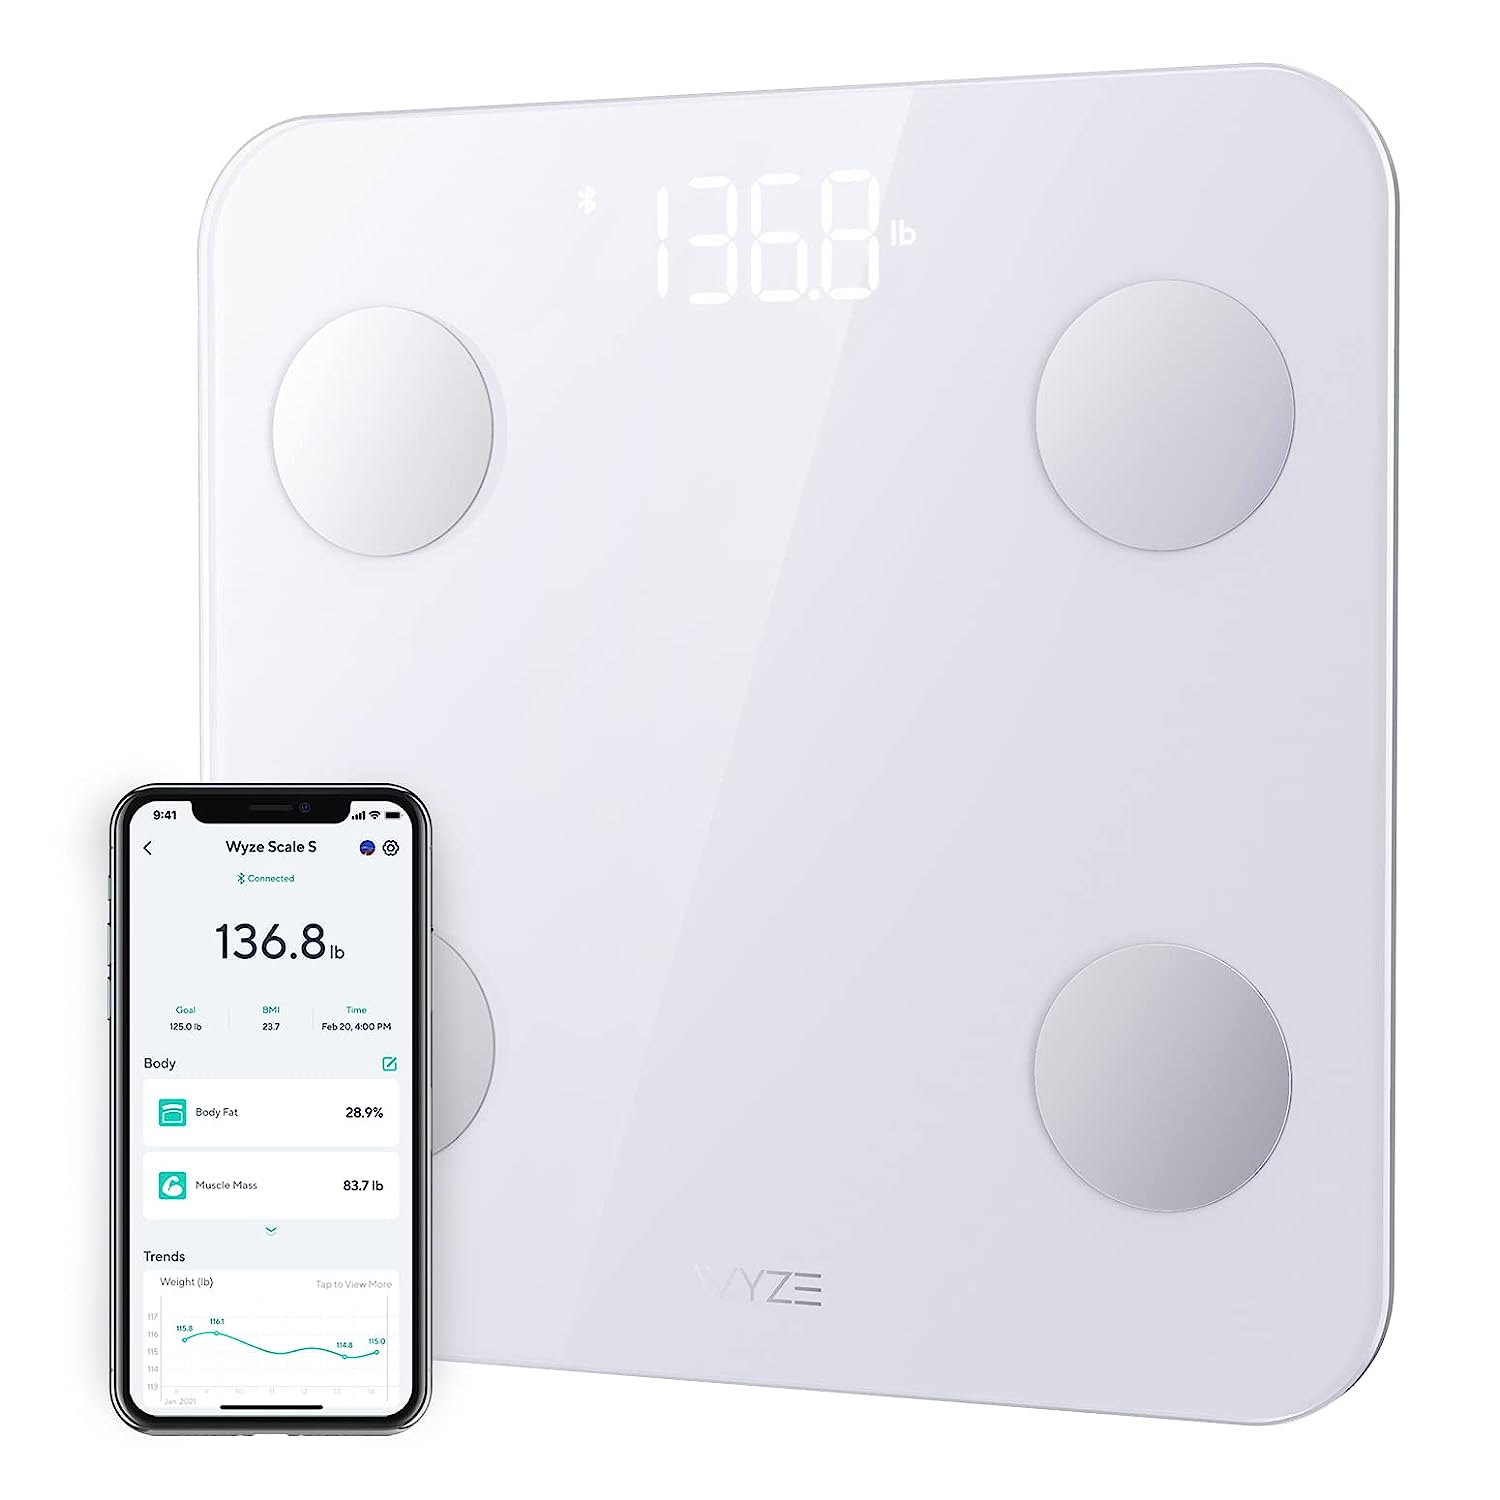 WYZE Smart Scale S - Scales body weight, body fat, bmi through app